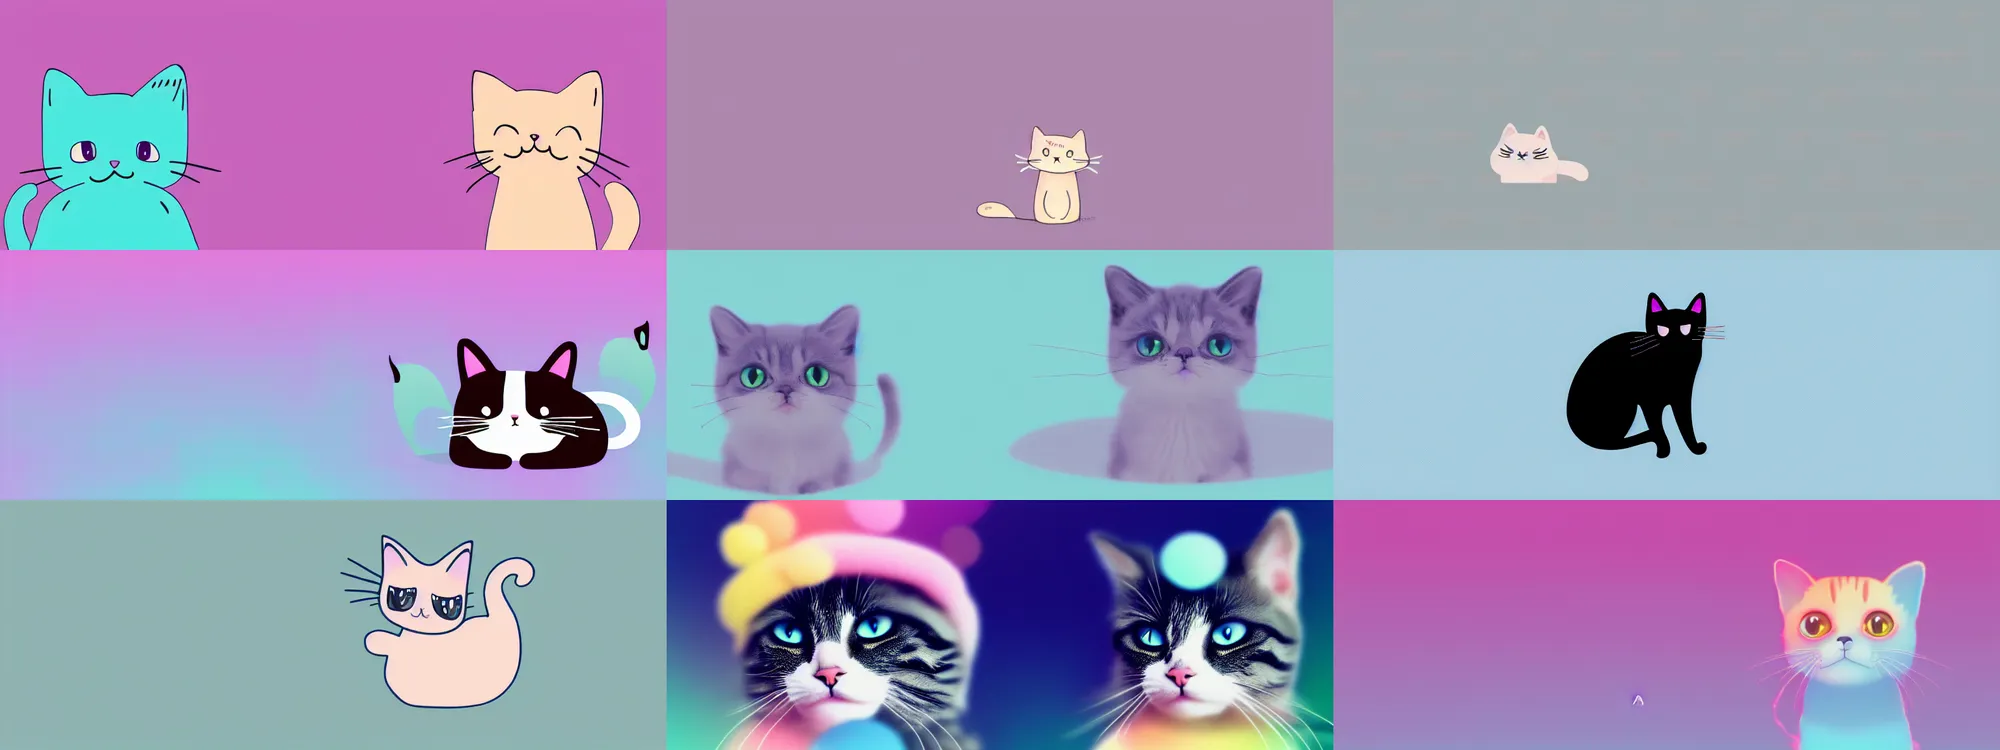 Prompt: A 2d linux digital wallpaper desktop background of a cute cat, in pastel colors